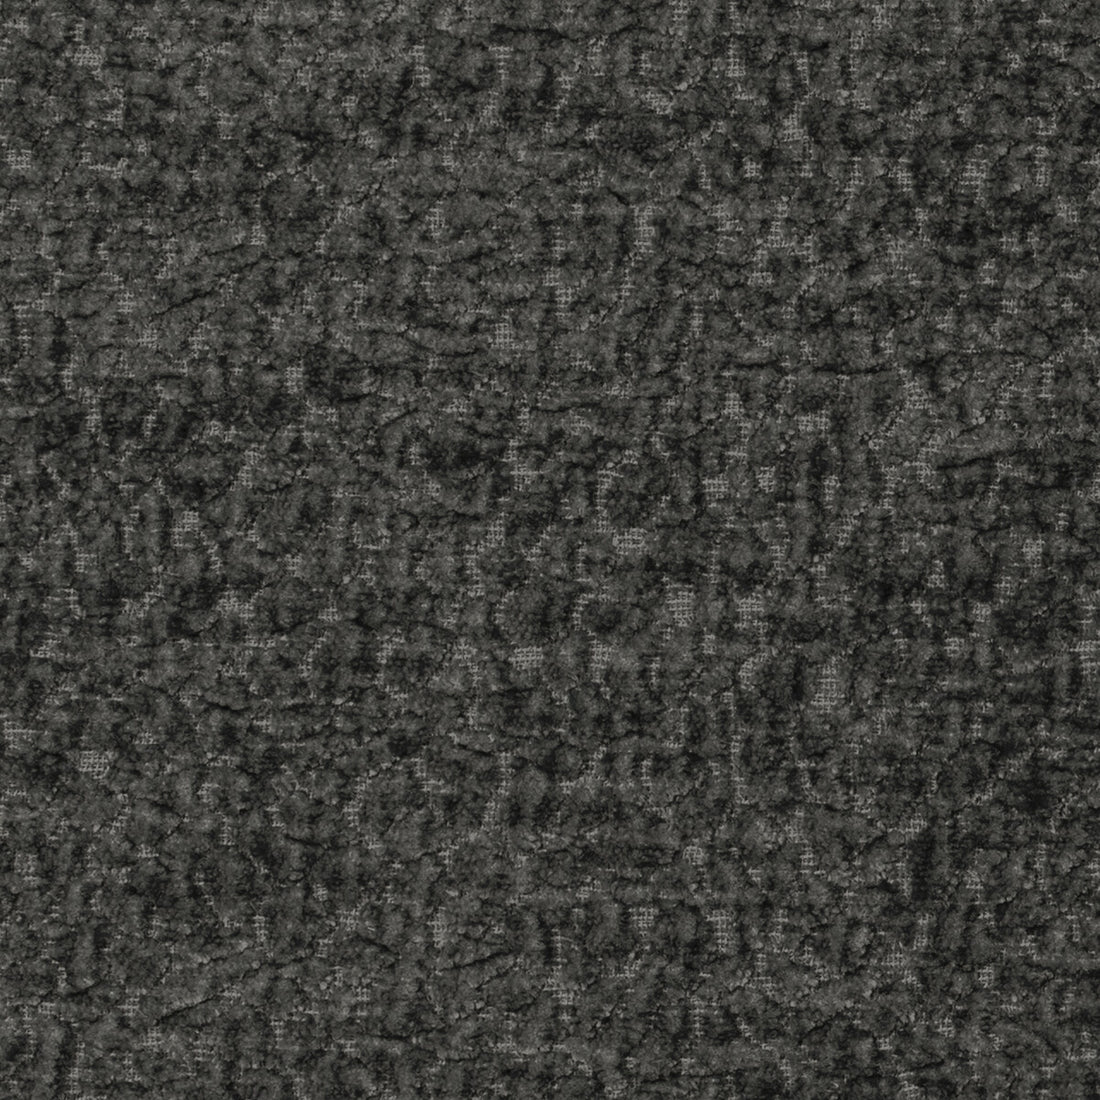 Barton Chenille fabric in graphite color - pattern 36074.2121.0 - by Kravet Smart